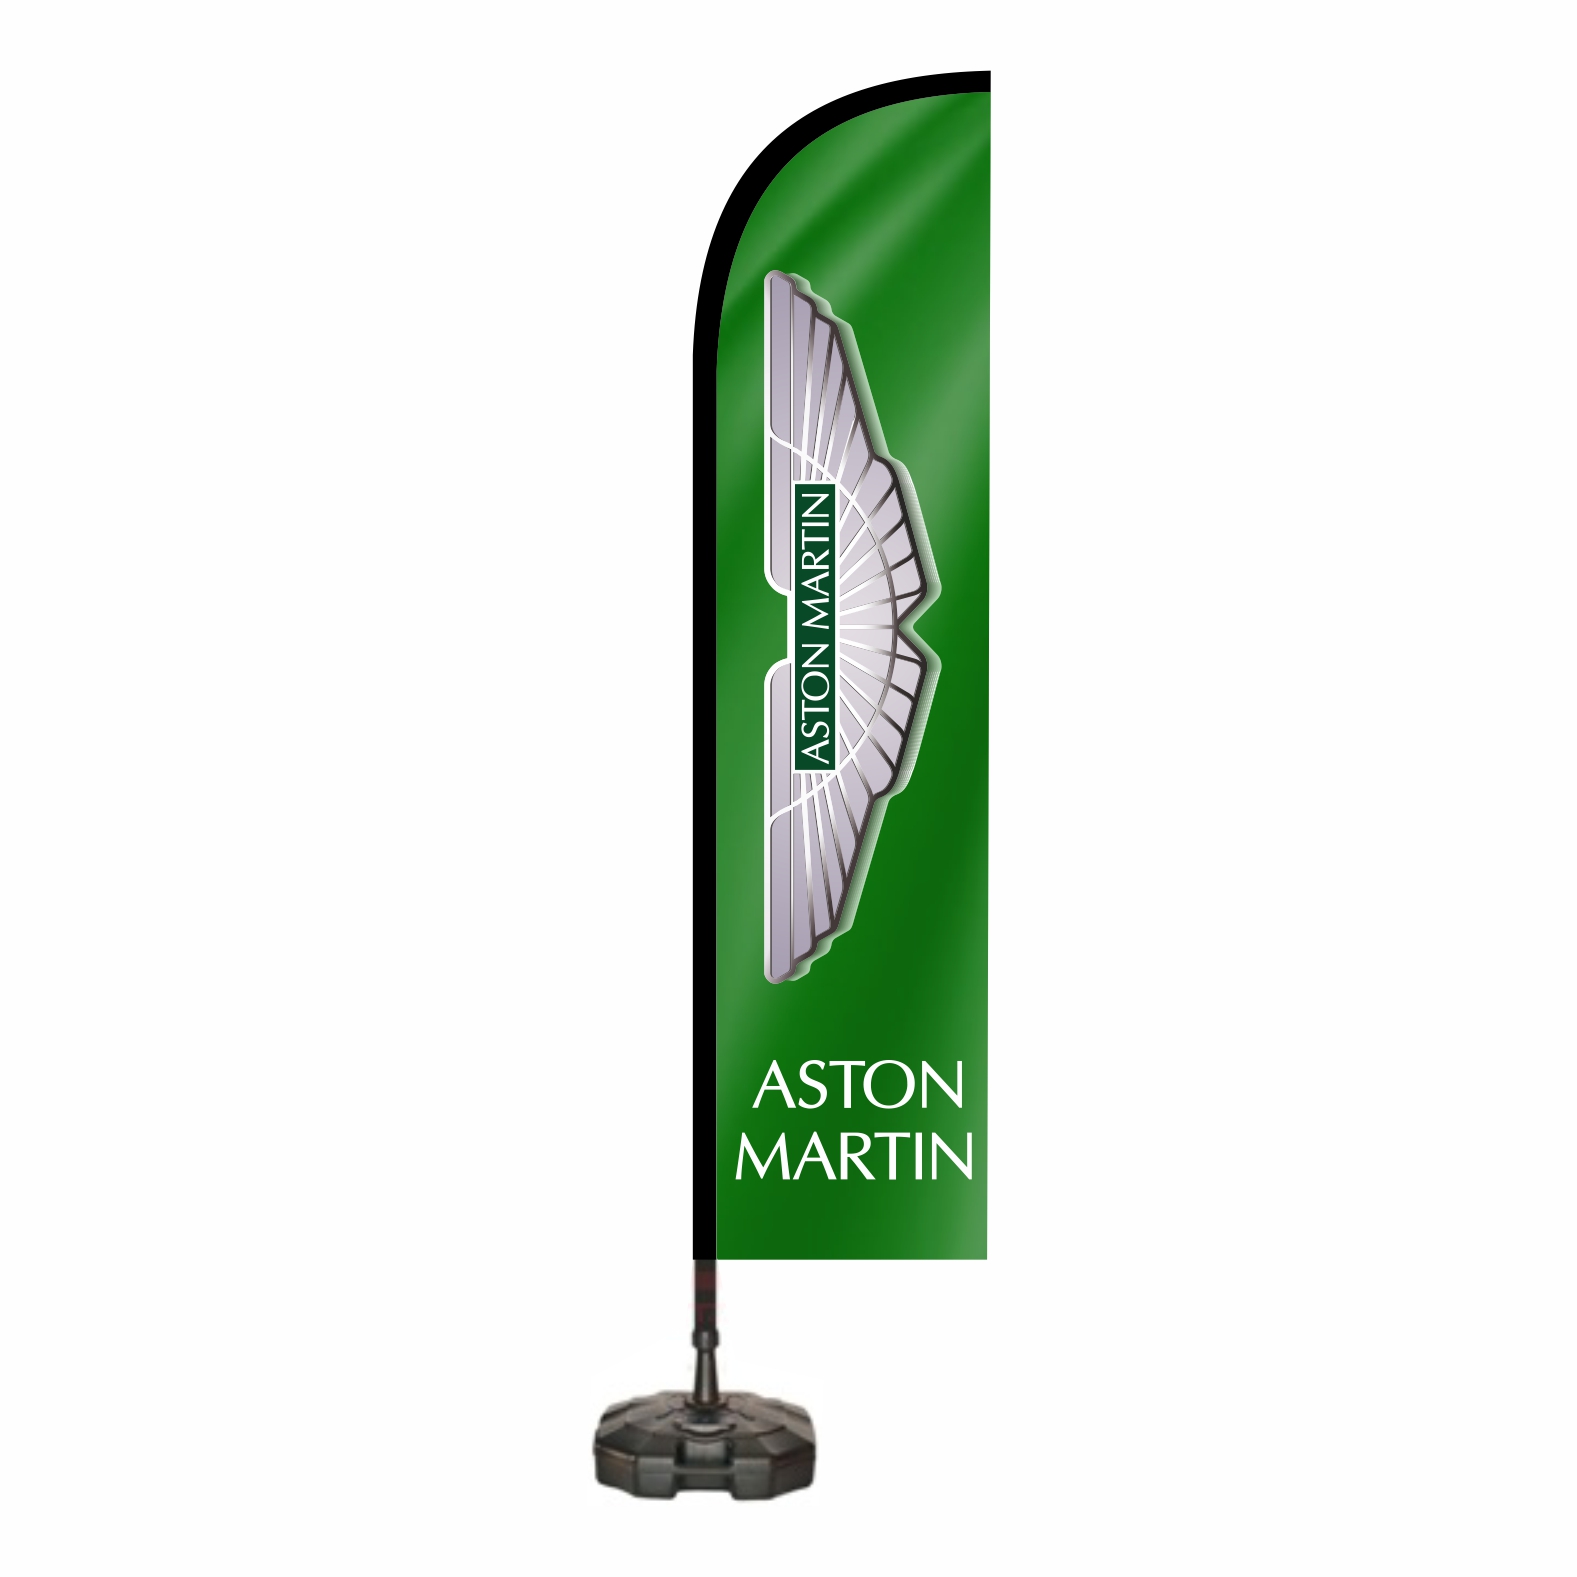 Aston Martin Oltal Bayra imalat